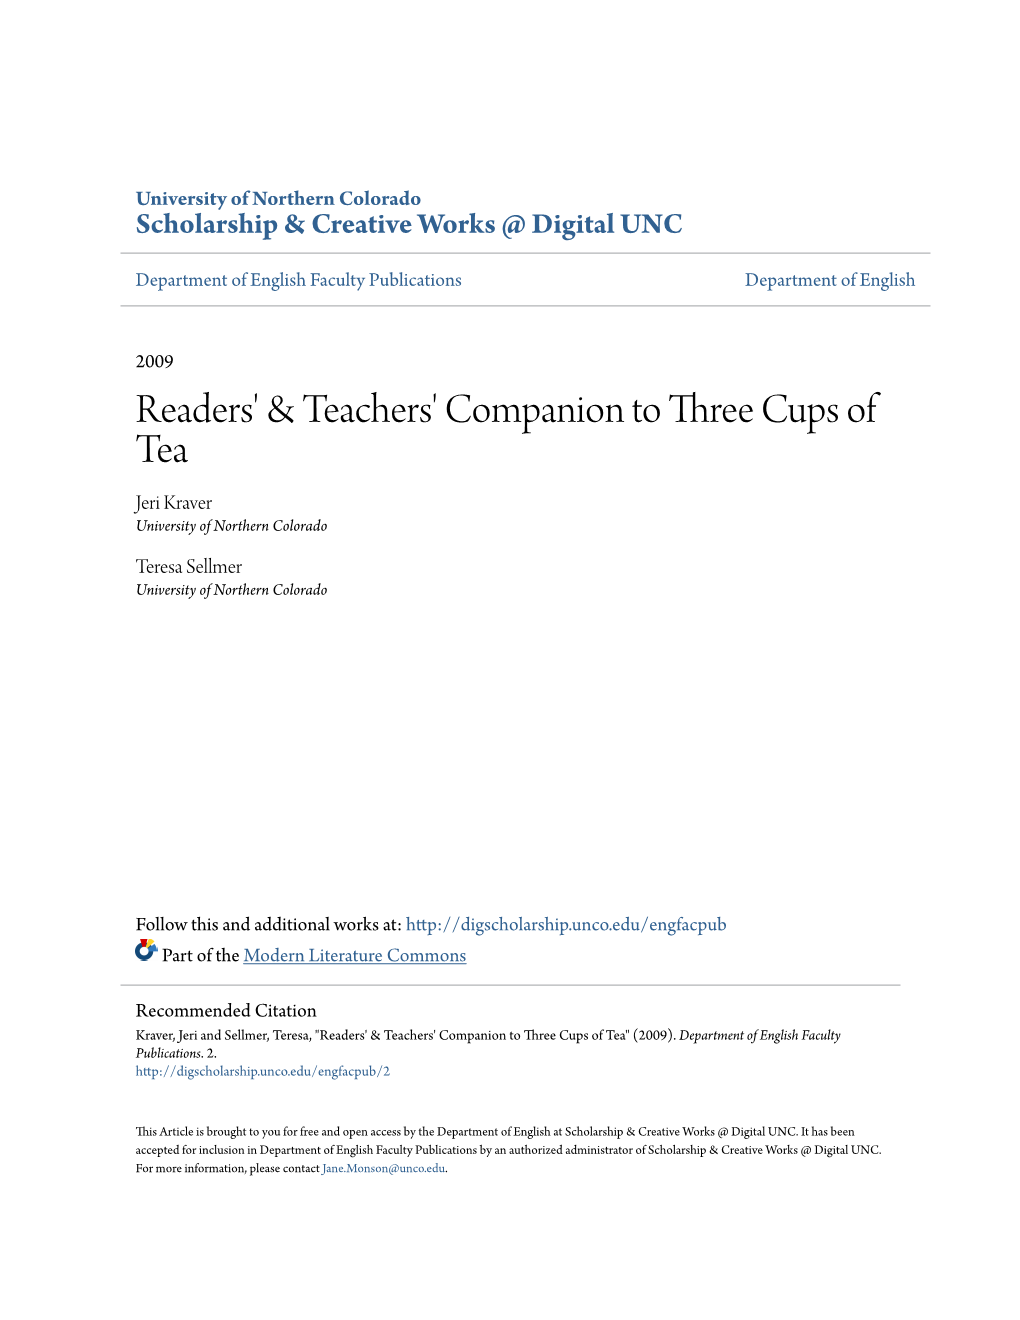 Readers' & Teachers' Companion to Three Cups Of